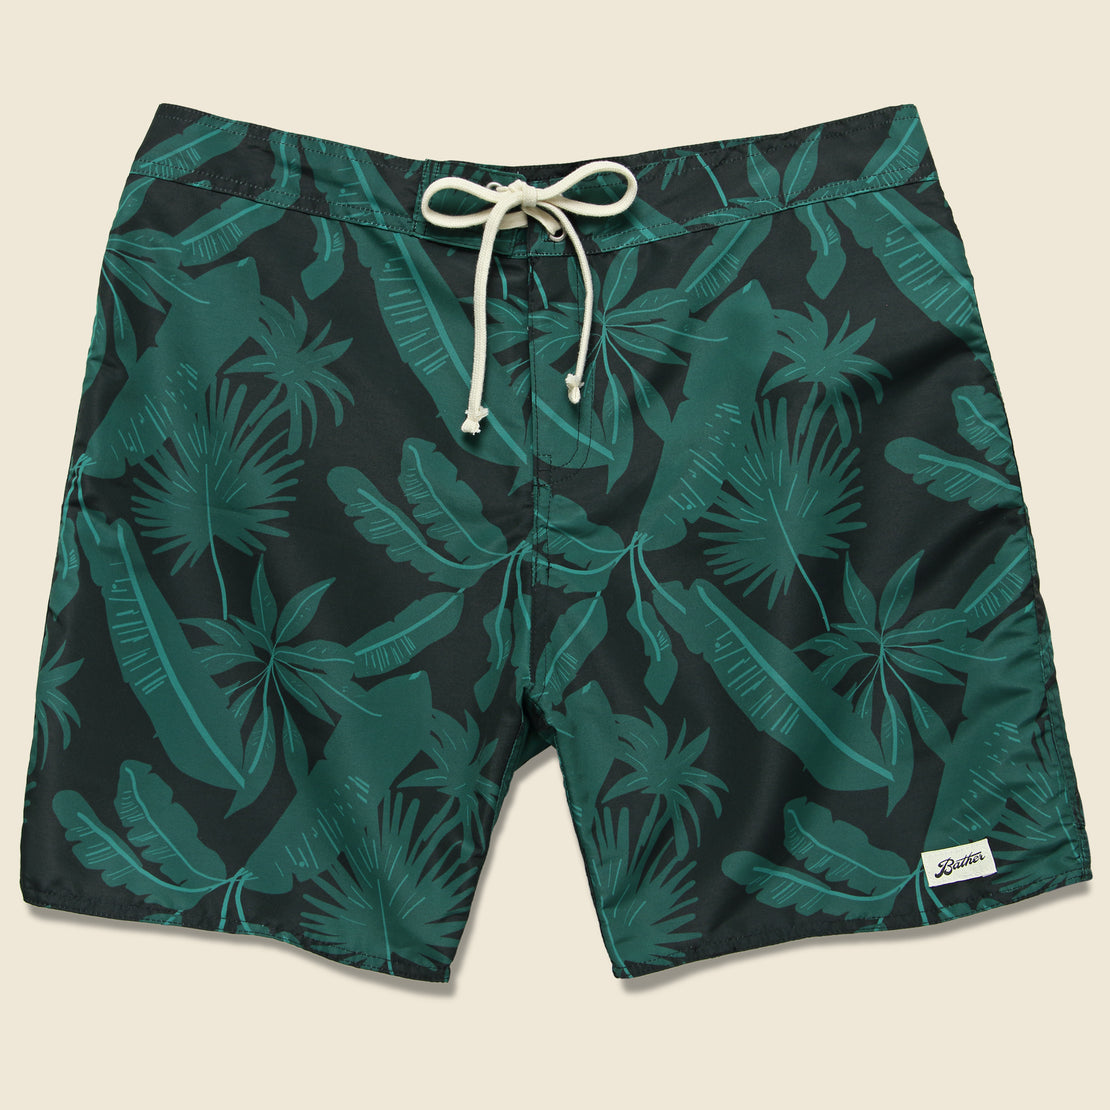 Bather Trunk Co. Tropical Palms Boardshort - Black/Green